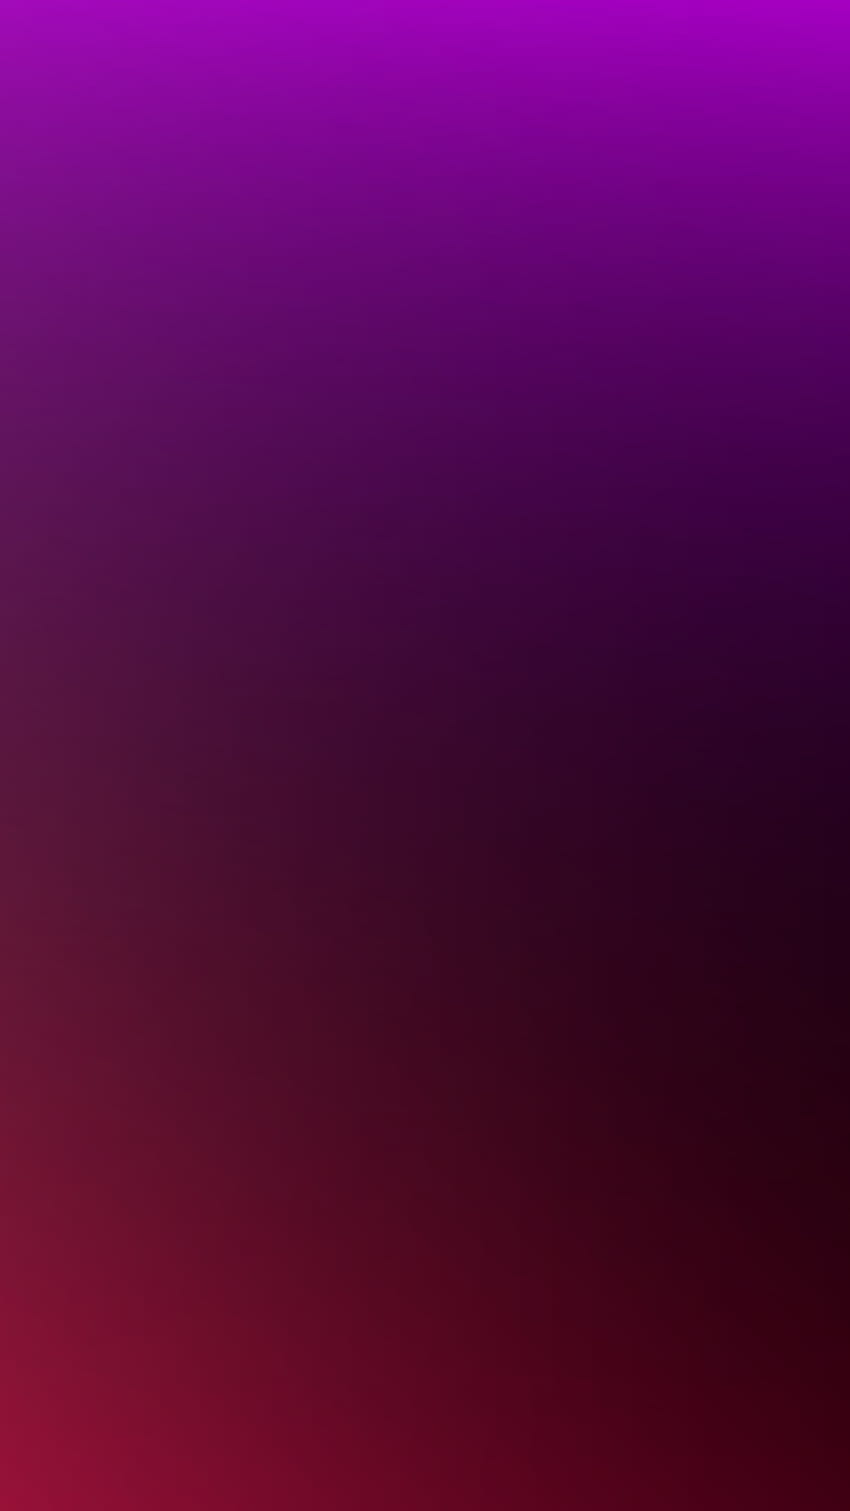 Dark Purple Gradient iPhone HD phone wallpaper